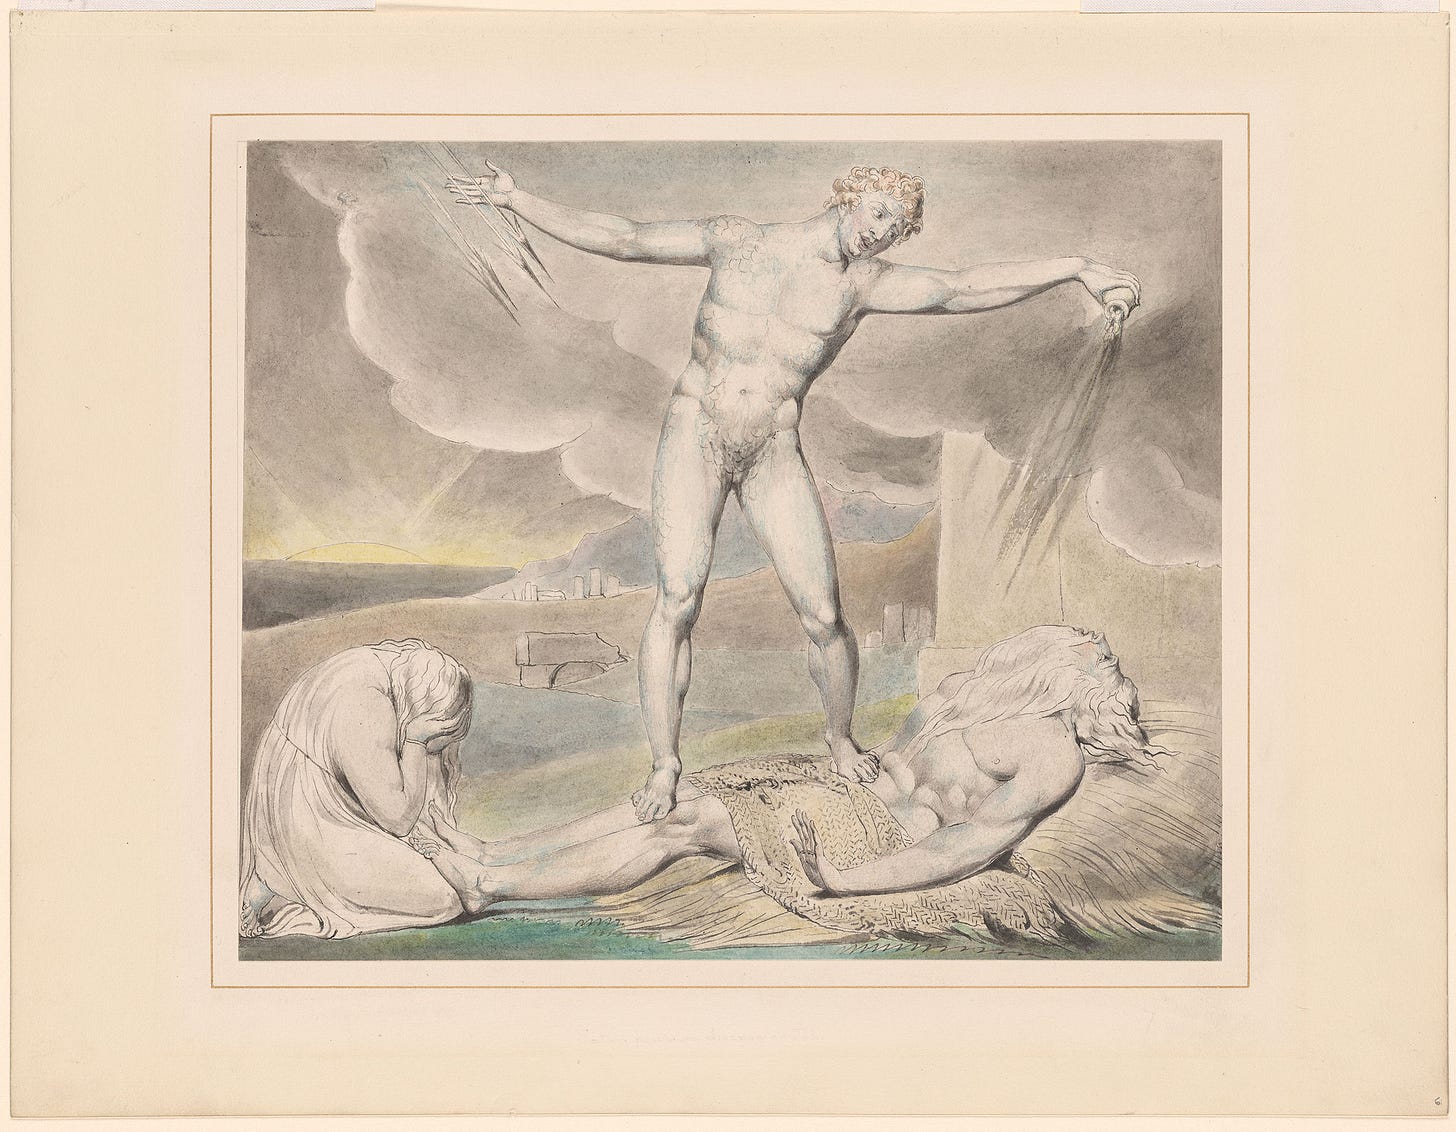 William Blake | Satan Smiting Job with Boils | Drawings Online | The Morgan Library & Museum